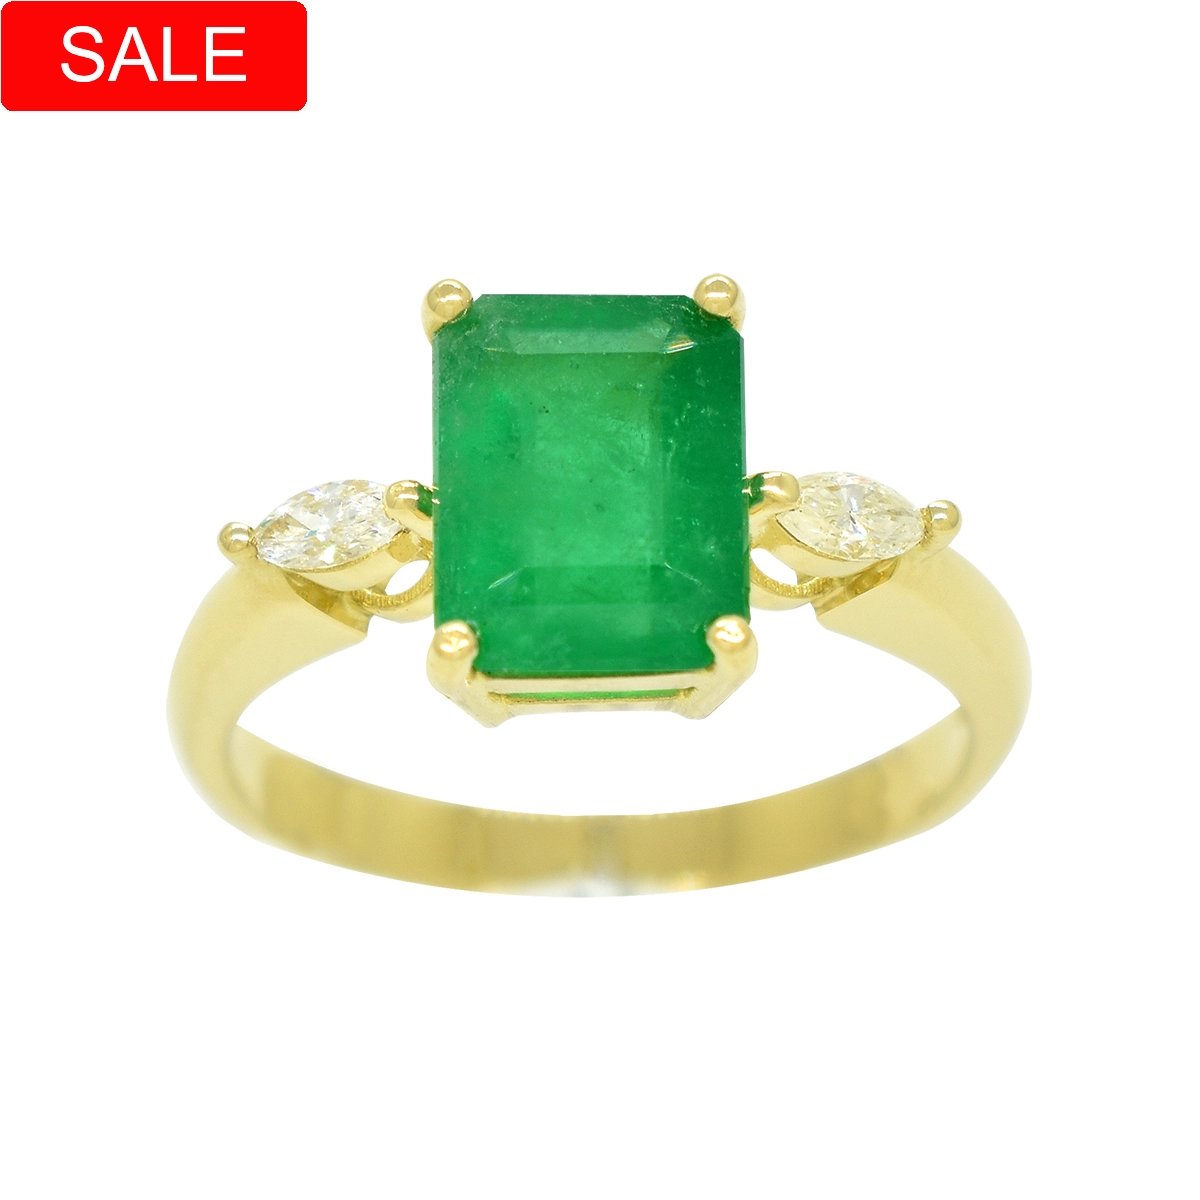 Emerald-cut Emerald and Marquise-shape Diamonds Ring